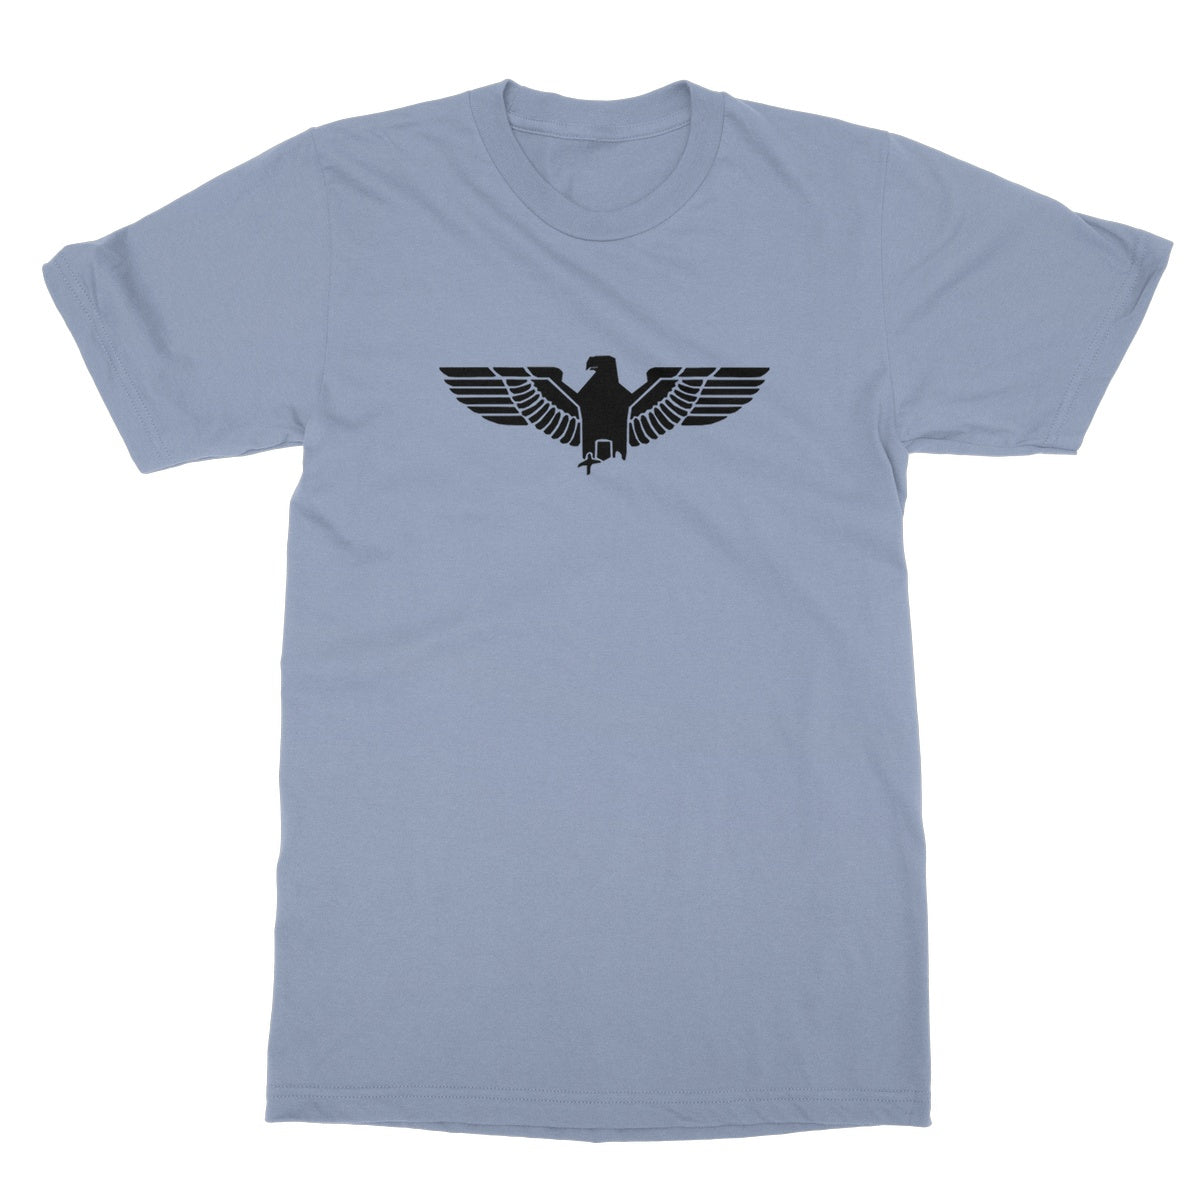 Eagle Emblem T-Shirt